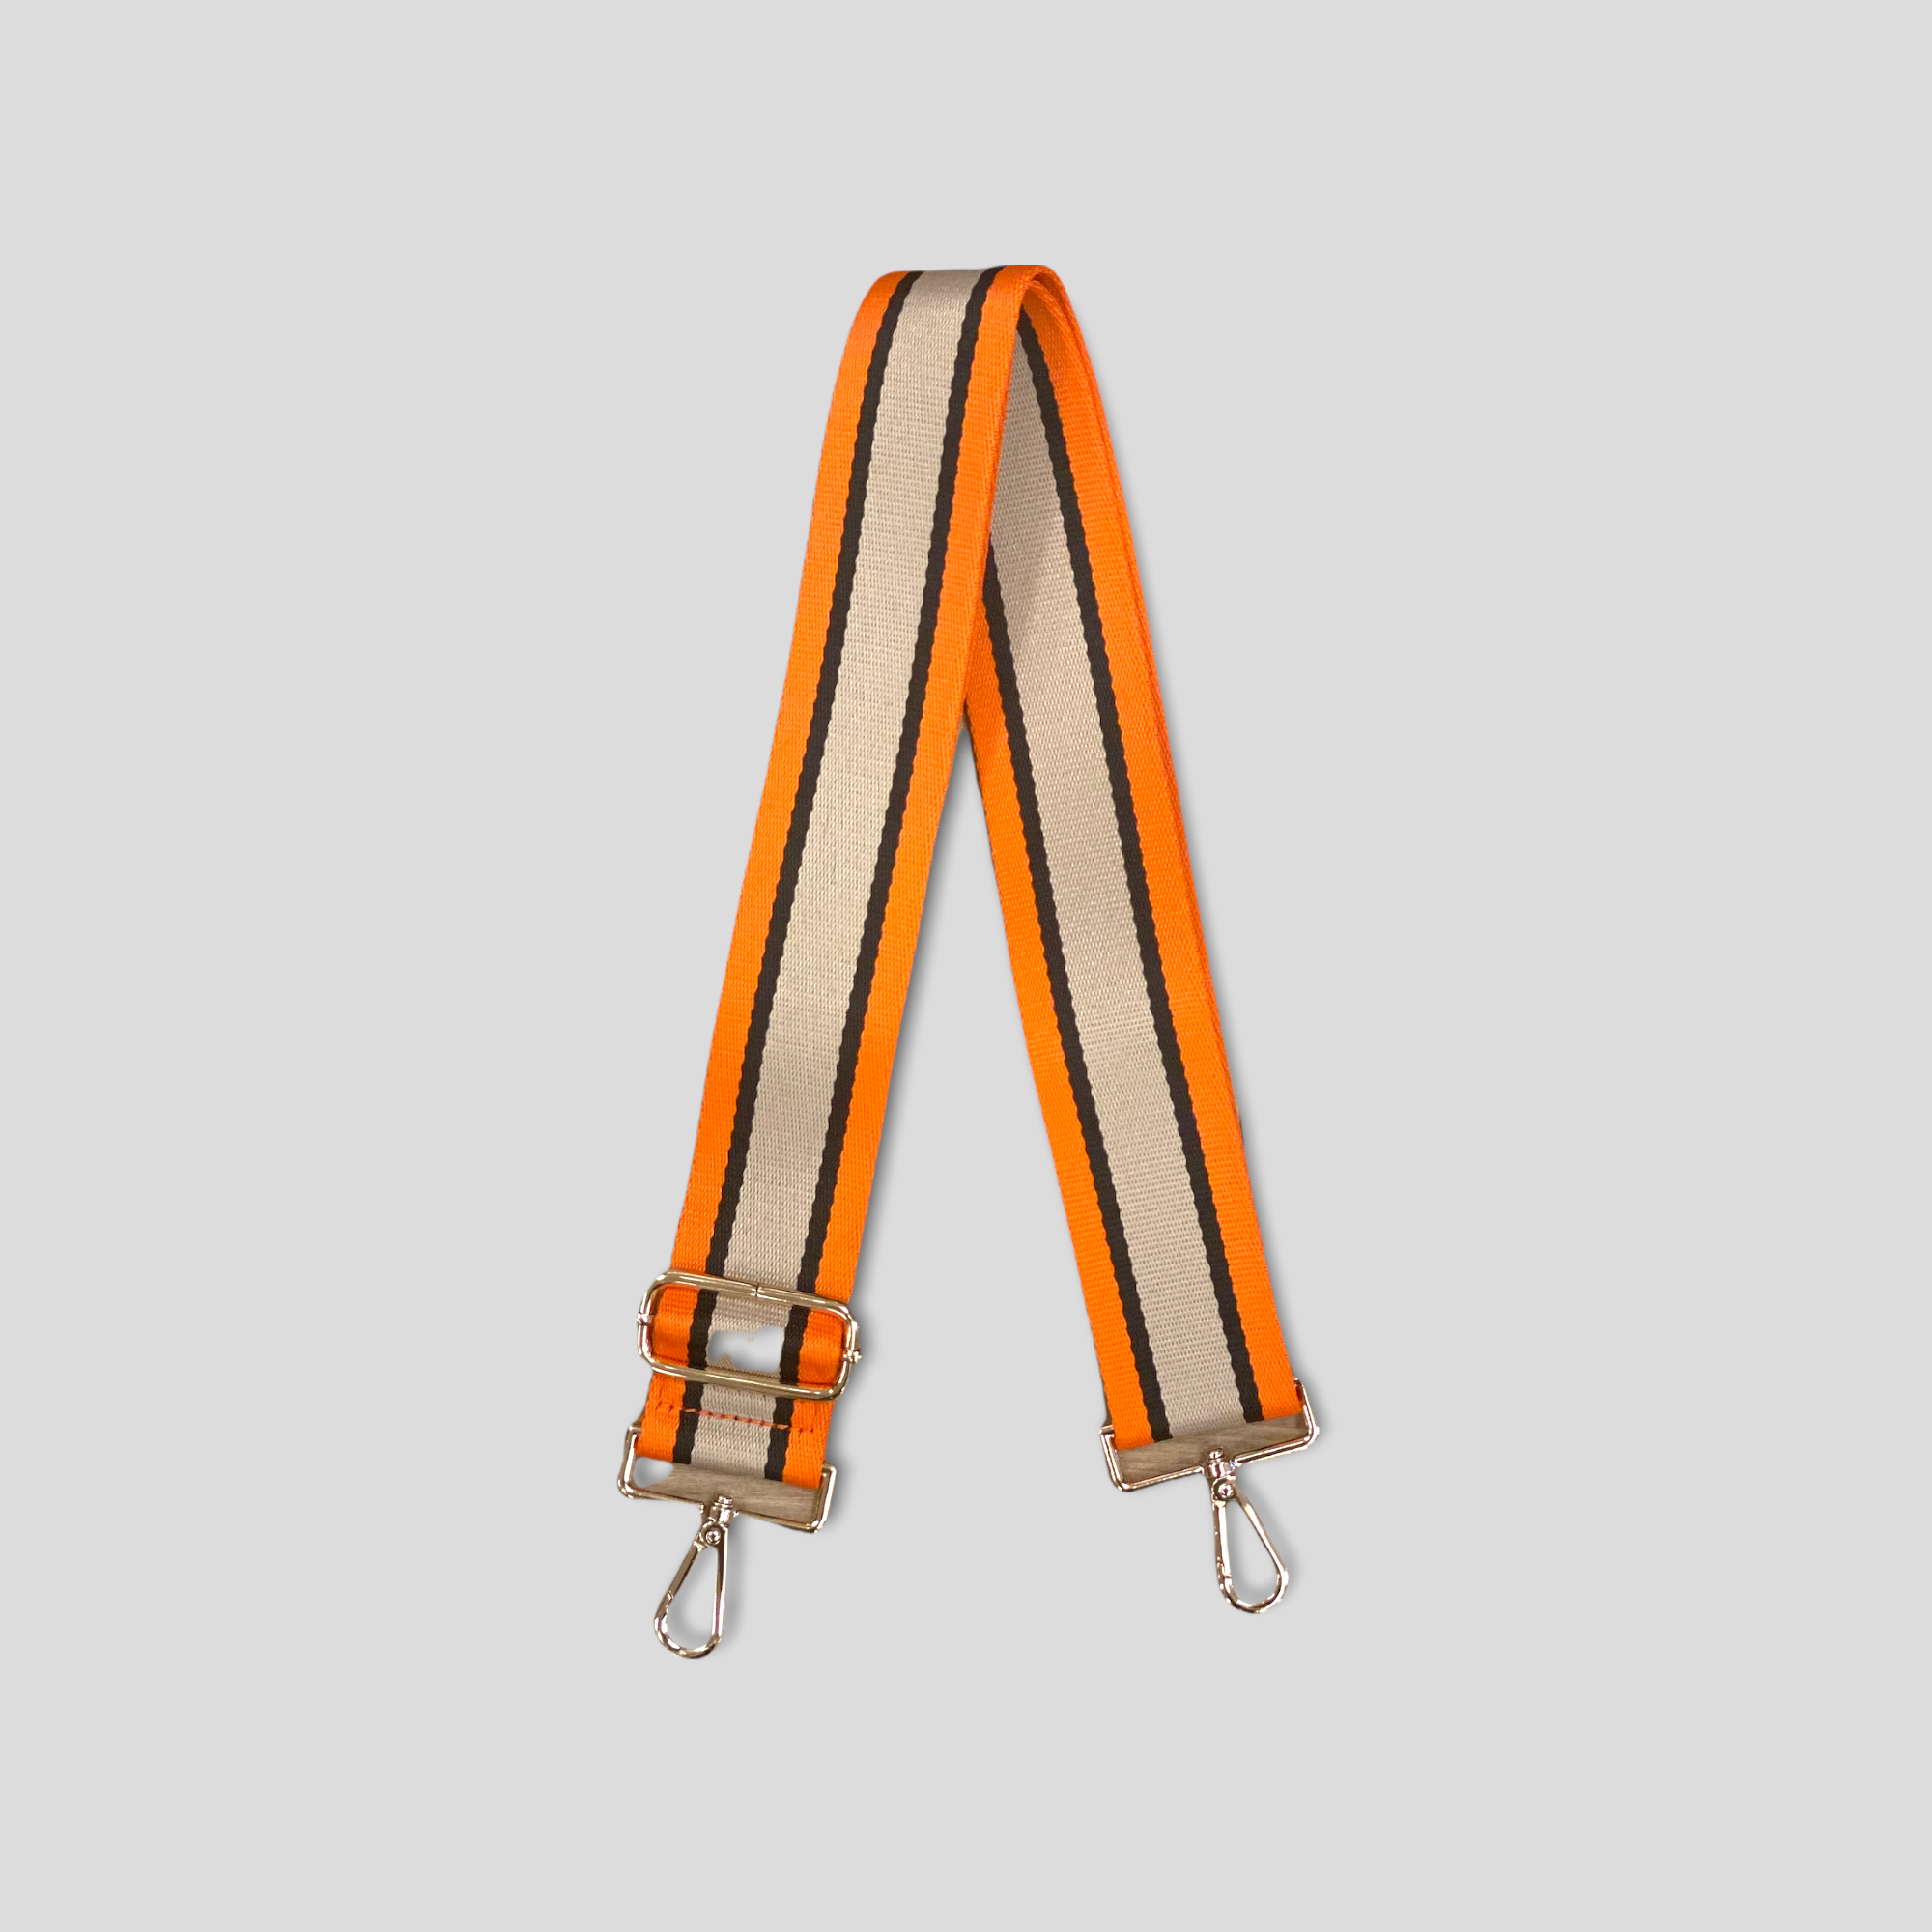 Ahdorned Vertical Stripe Bag Strap - Orange/Black/Khaki (Gold Hardware